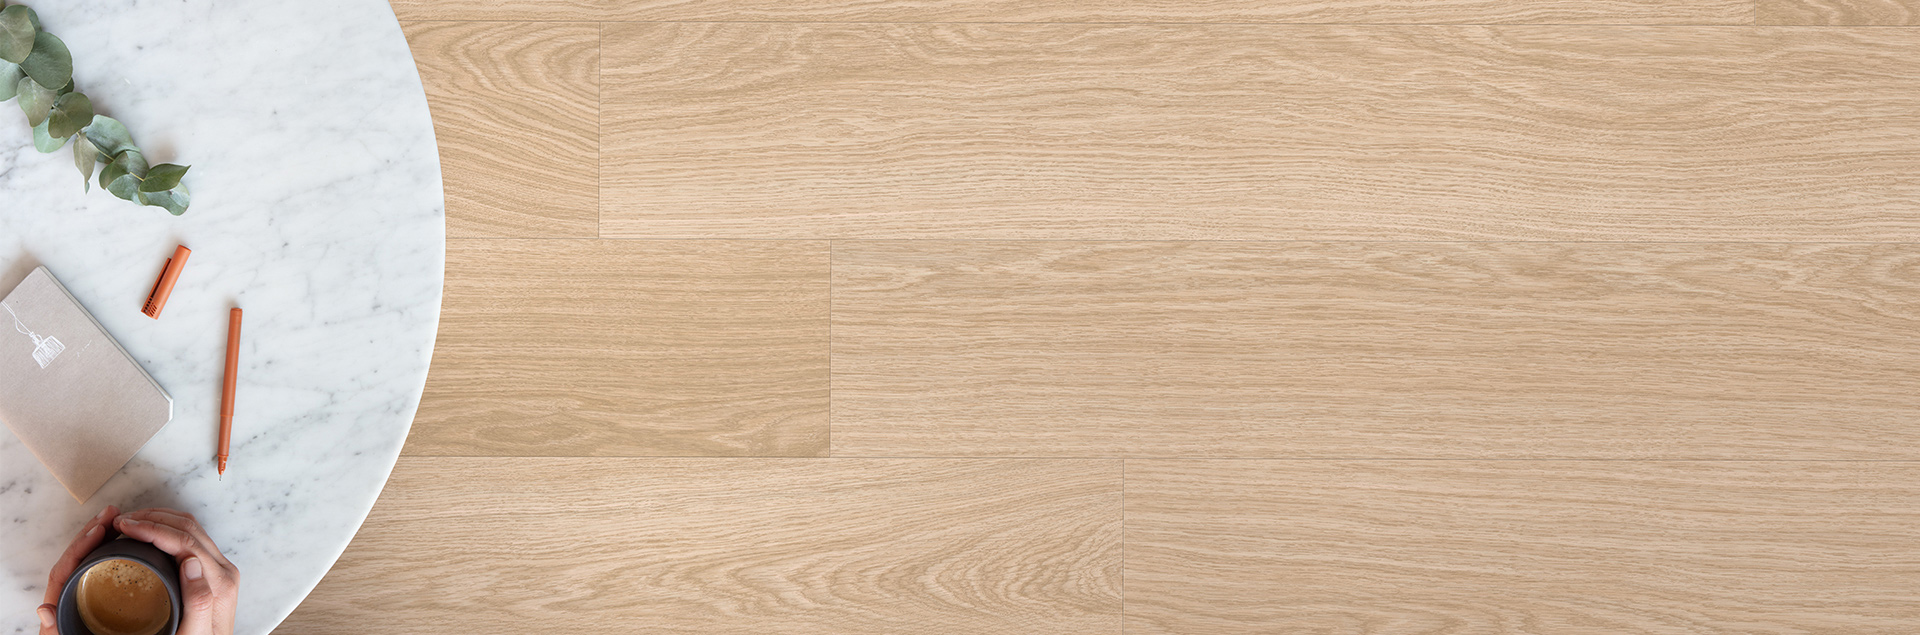 Home, Timber Laminate Flooring Or Vinyl